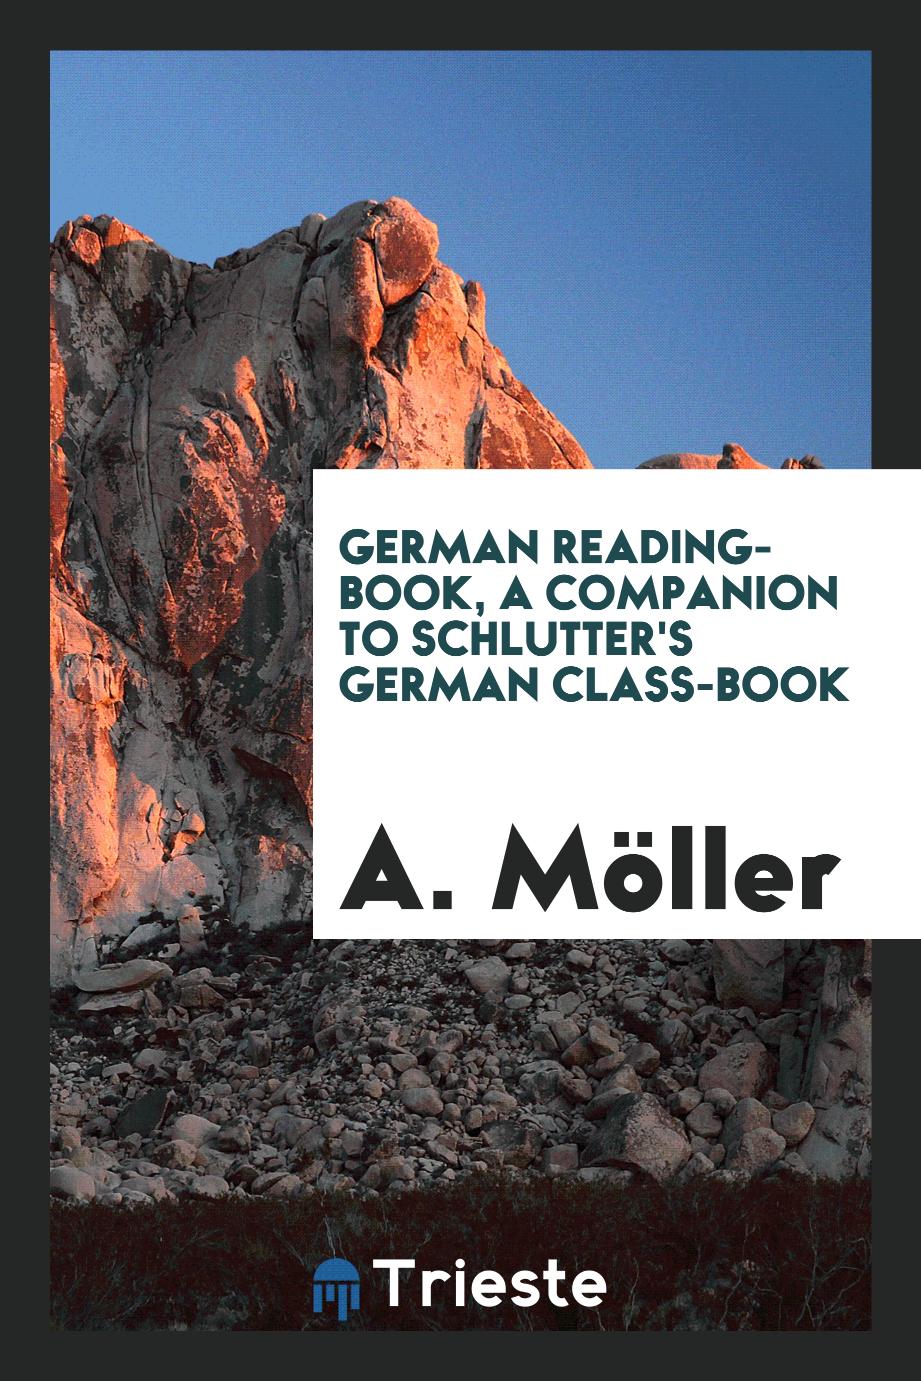 German Reading-Book, a Companion to Schlutter's German Class-Book